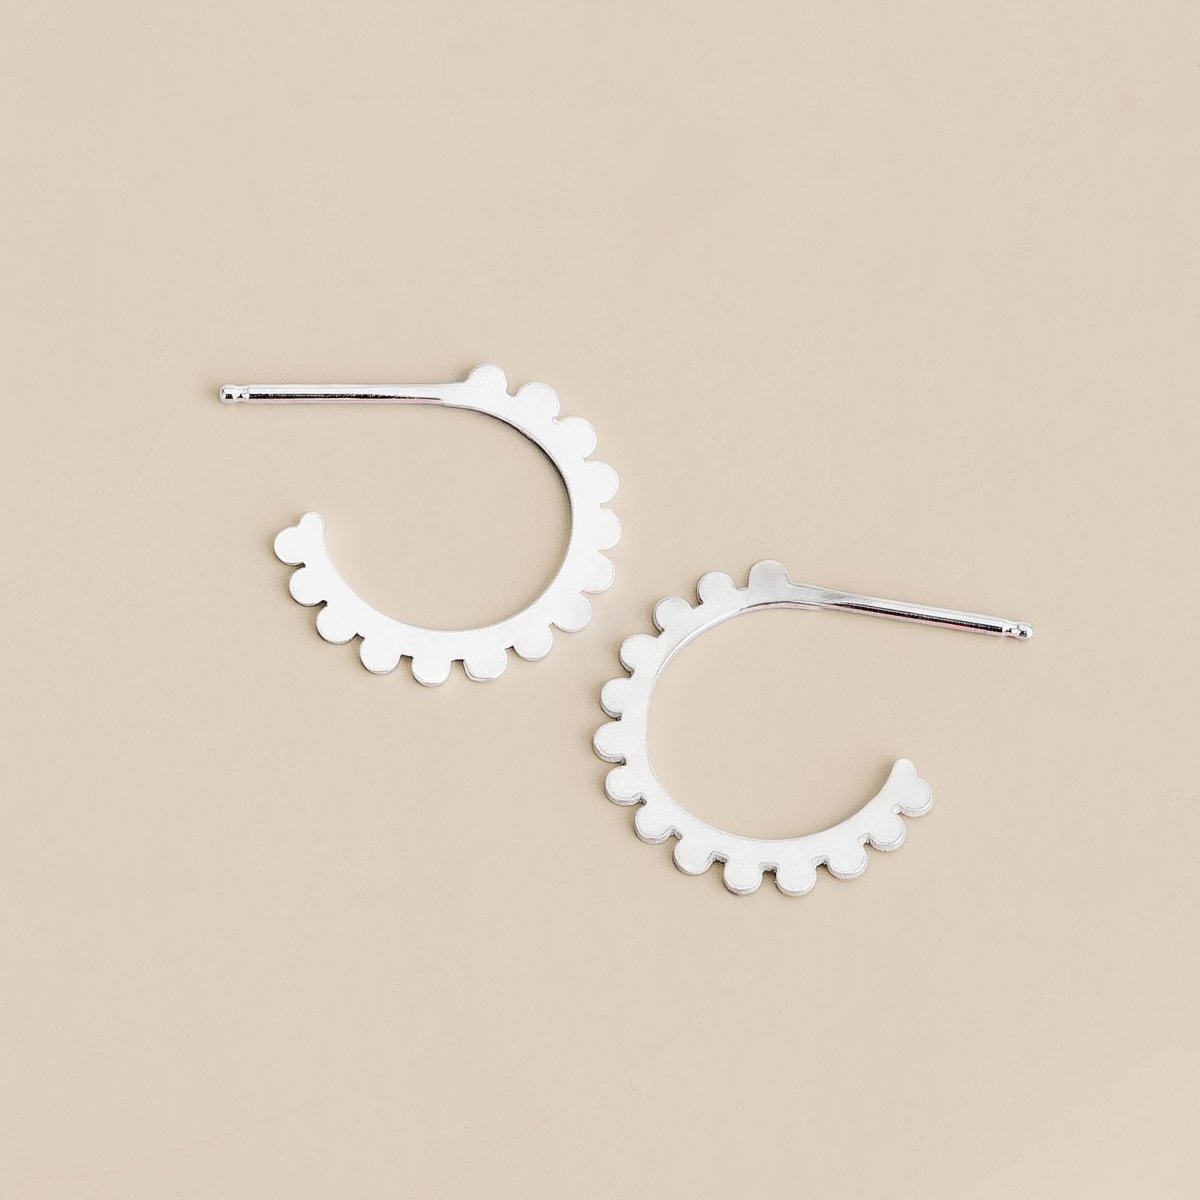 Large Poppy Hoop Earrings - Melanie Golden Jewelry - _badge_NEW, earrings, hoop earrings, hoops, new